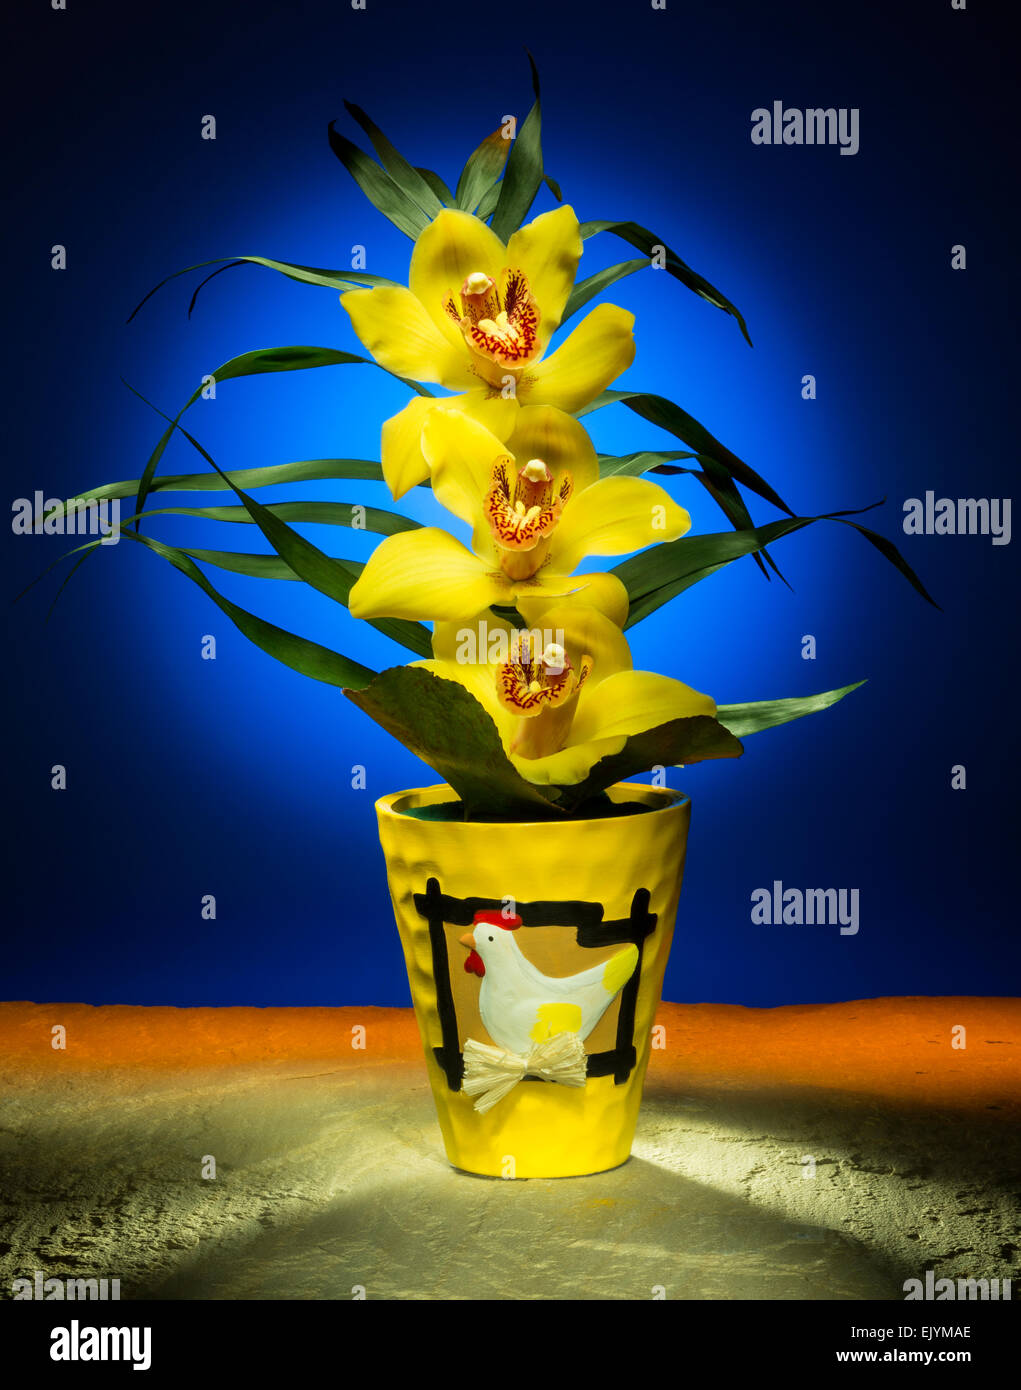 Una orquídea de Pascua - Studio bodegón imagen fotografiada utilizando técnicas de pintura de luz. Foto de stock